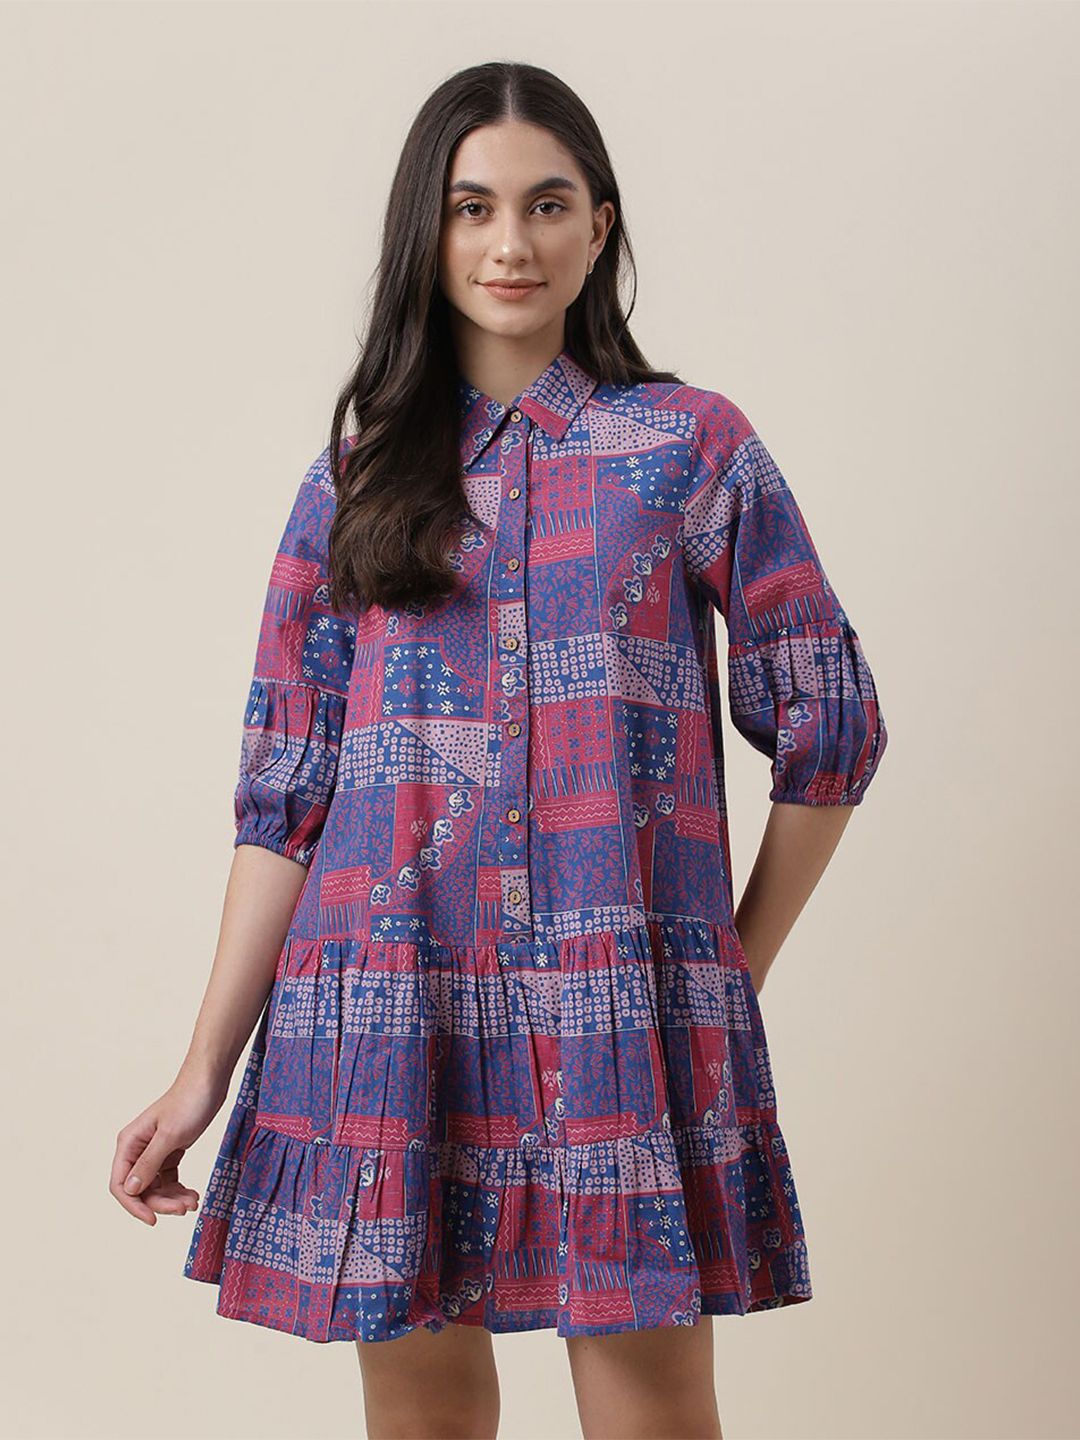 Fabindia Blue Ethnic Shirt Dress Price in India